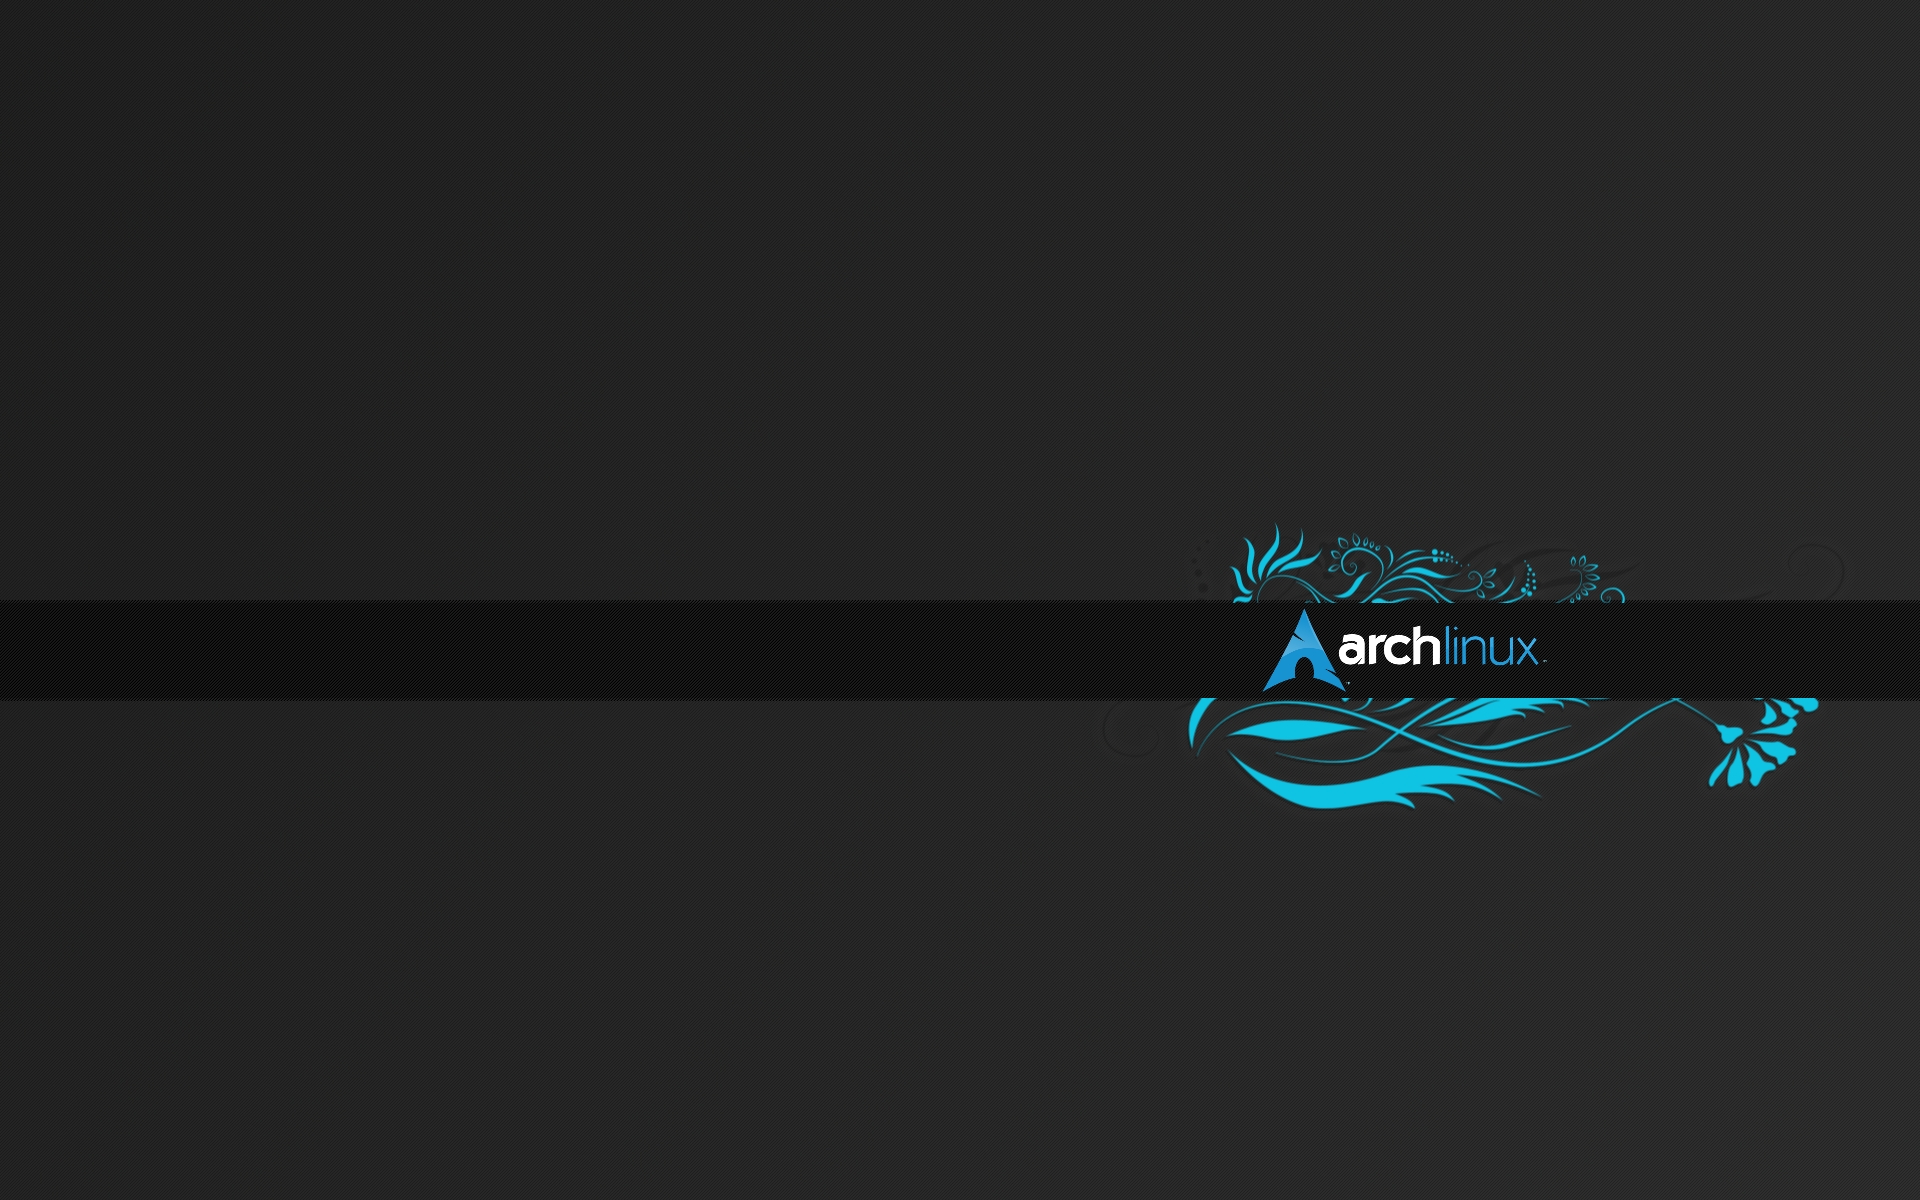 HD wallpaper Archlinux logo black Arch Linux communication sign  western script  Wallpaper Flare